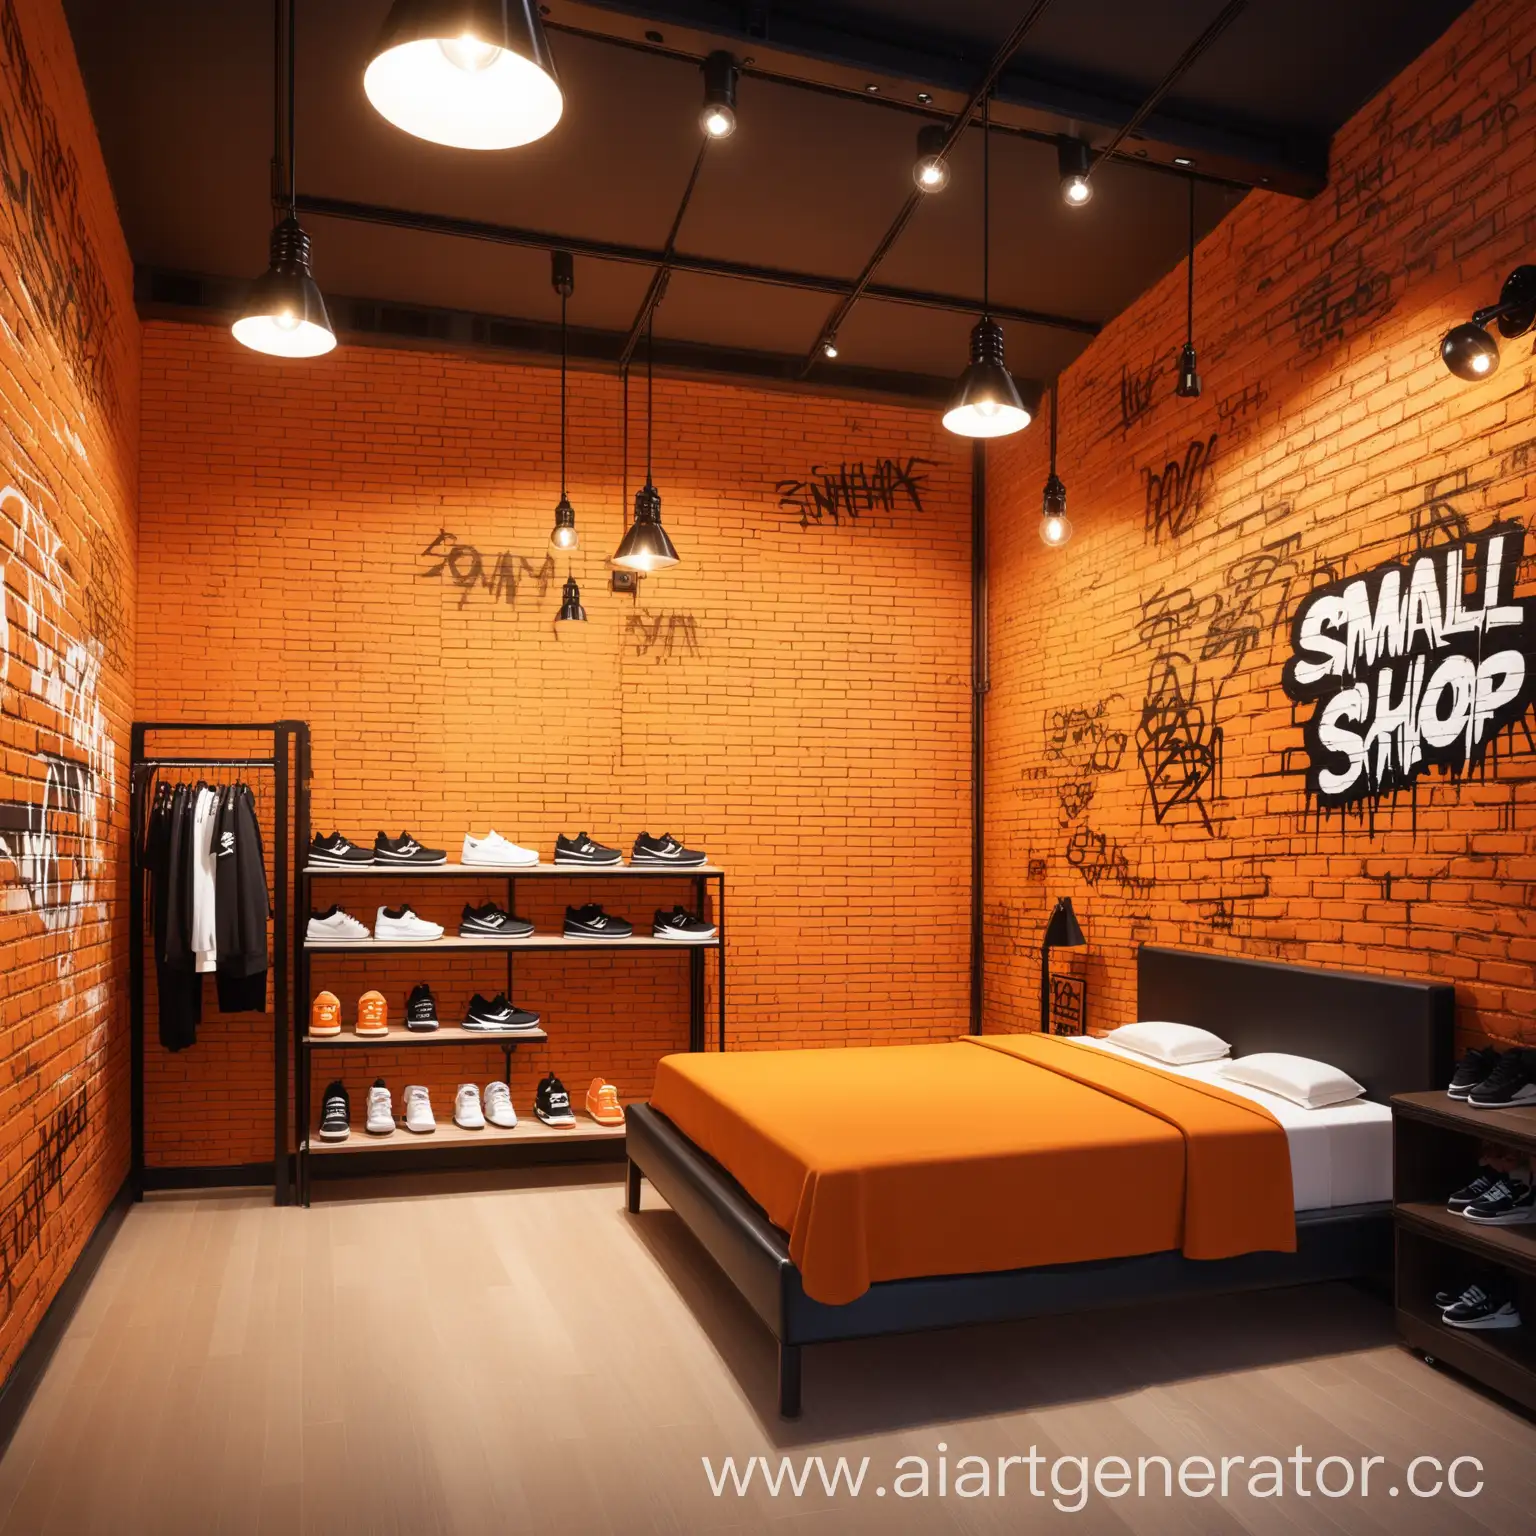 Cozy-Sneaker-Shop-with-Vibrant-Orange-Tones-and-Graffiti-Accent-Wall